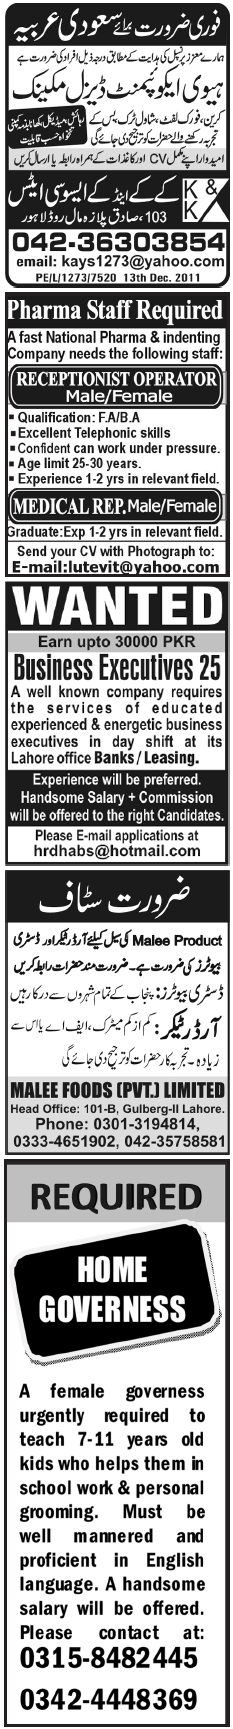 Misc. Jobs in Karachi Jang Classified 6